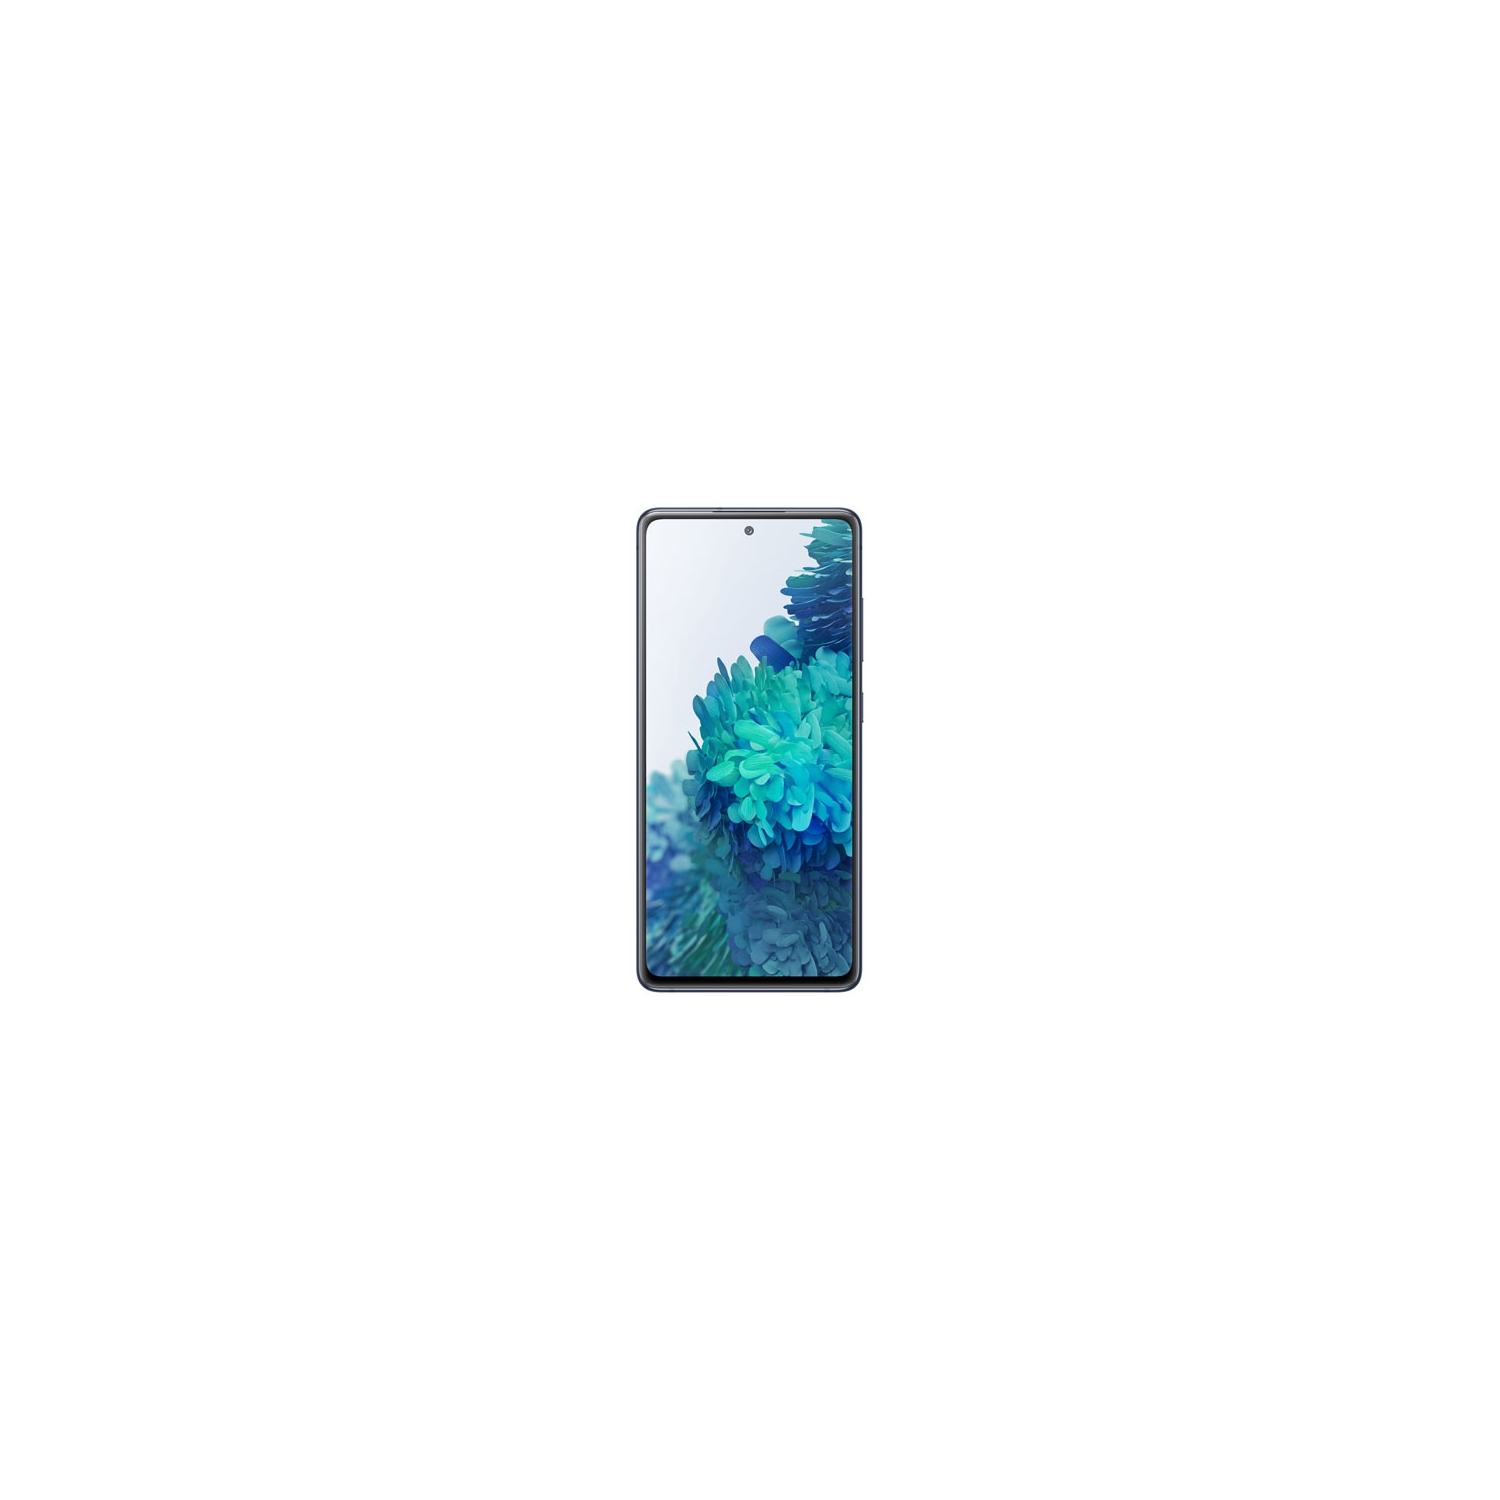 Samsung Galaxy S20 FE 5G 128GB Smartphone - Cloud Navy - Unlocked - Open Box